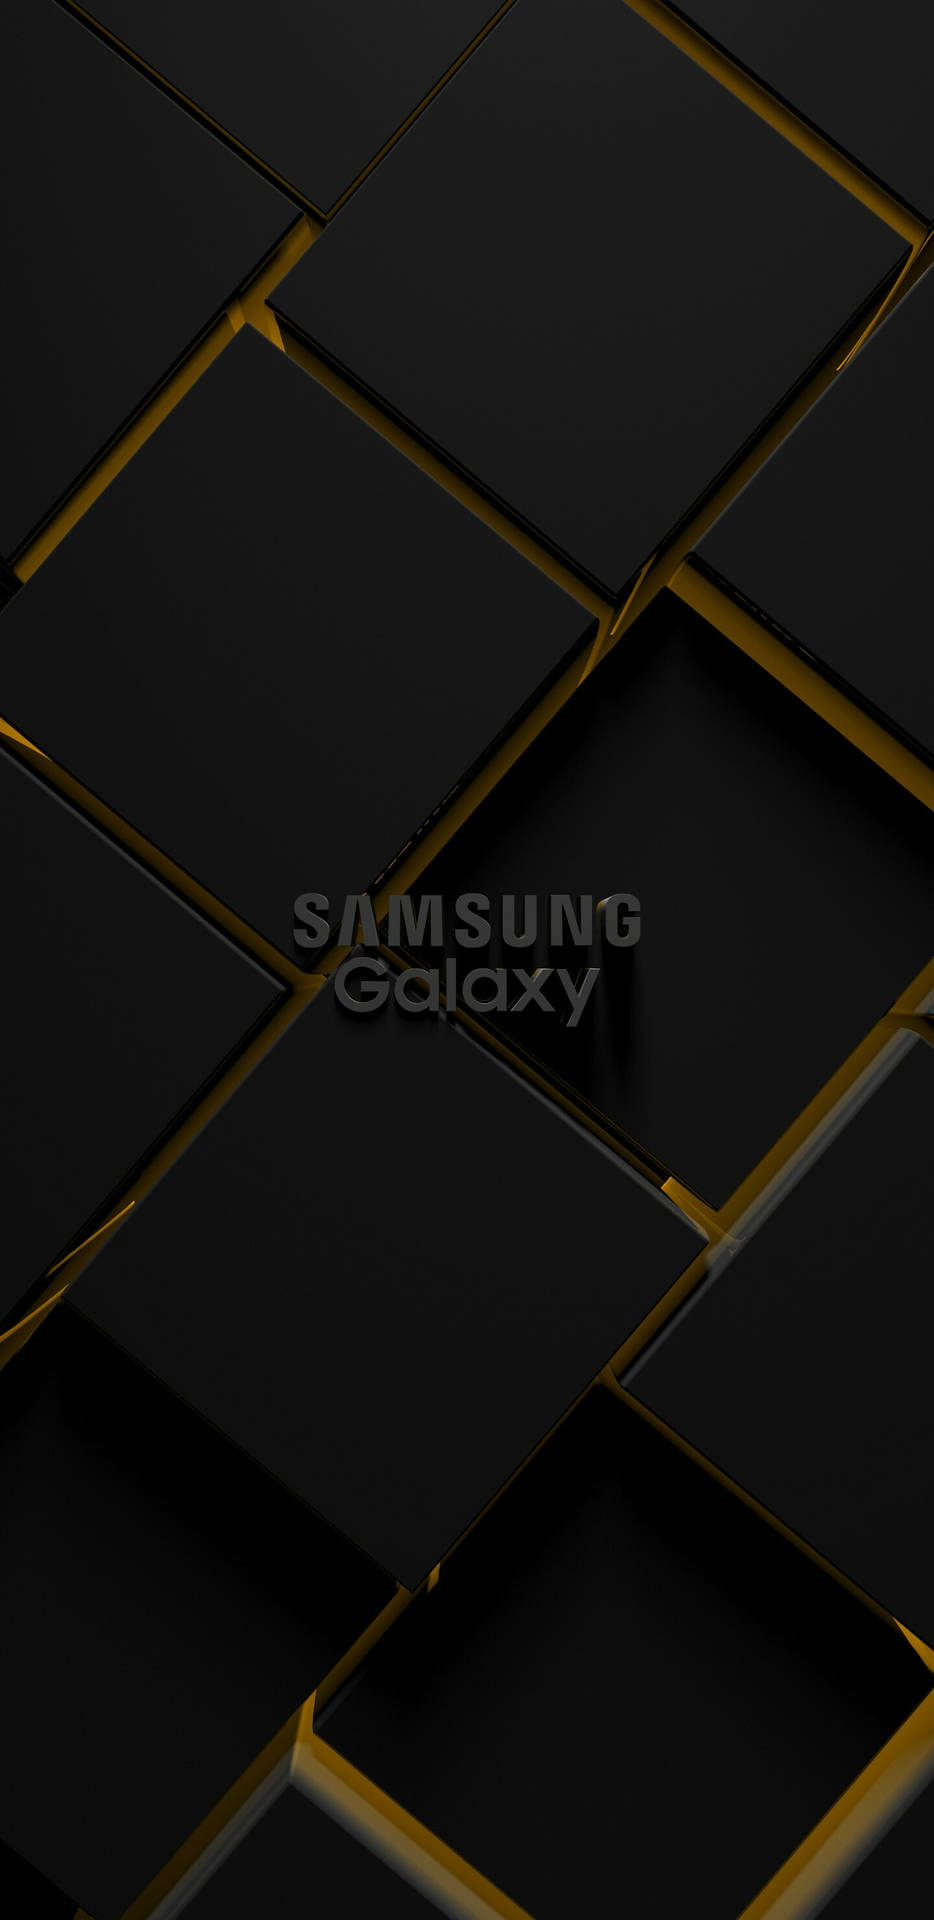 Samsung Galaxy Rhombus Yellow Light